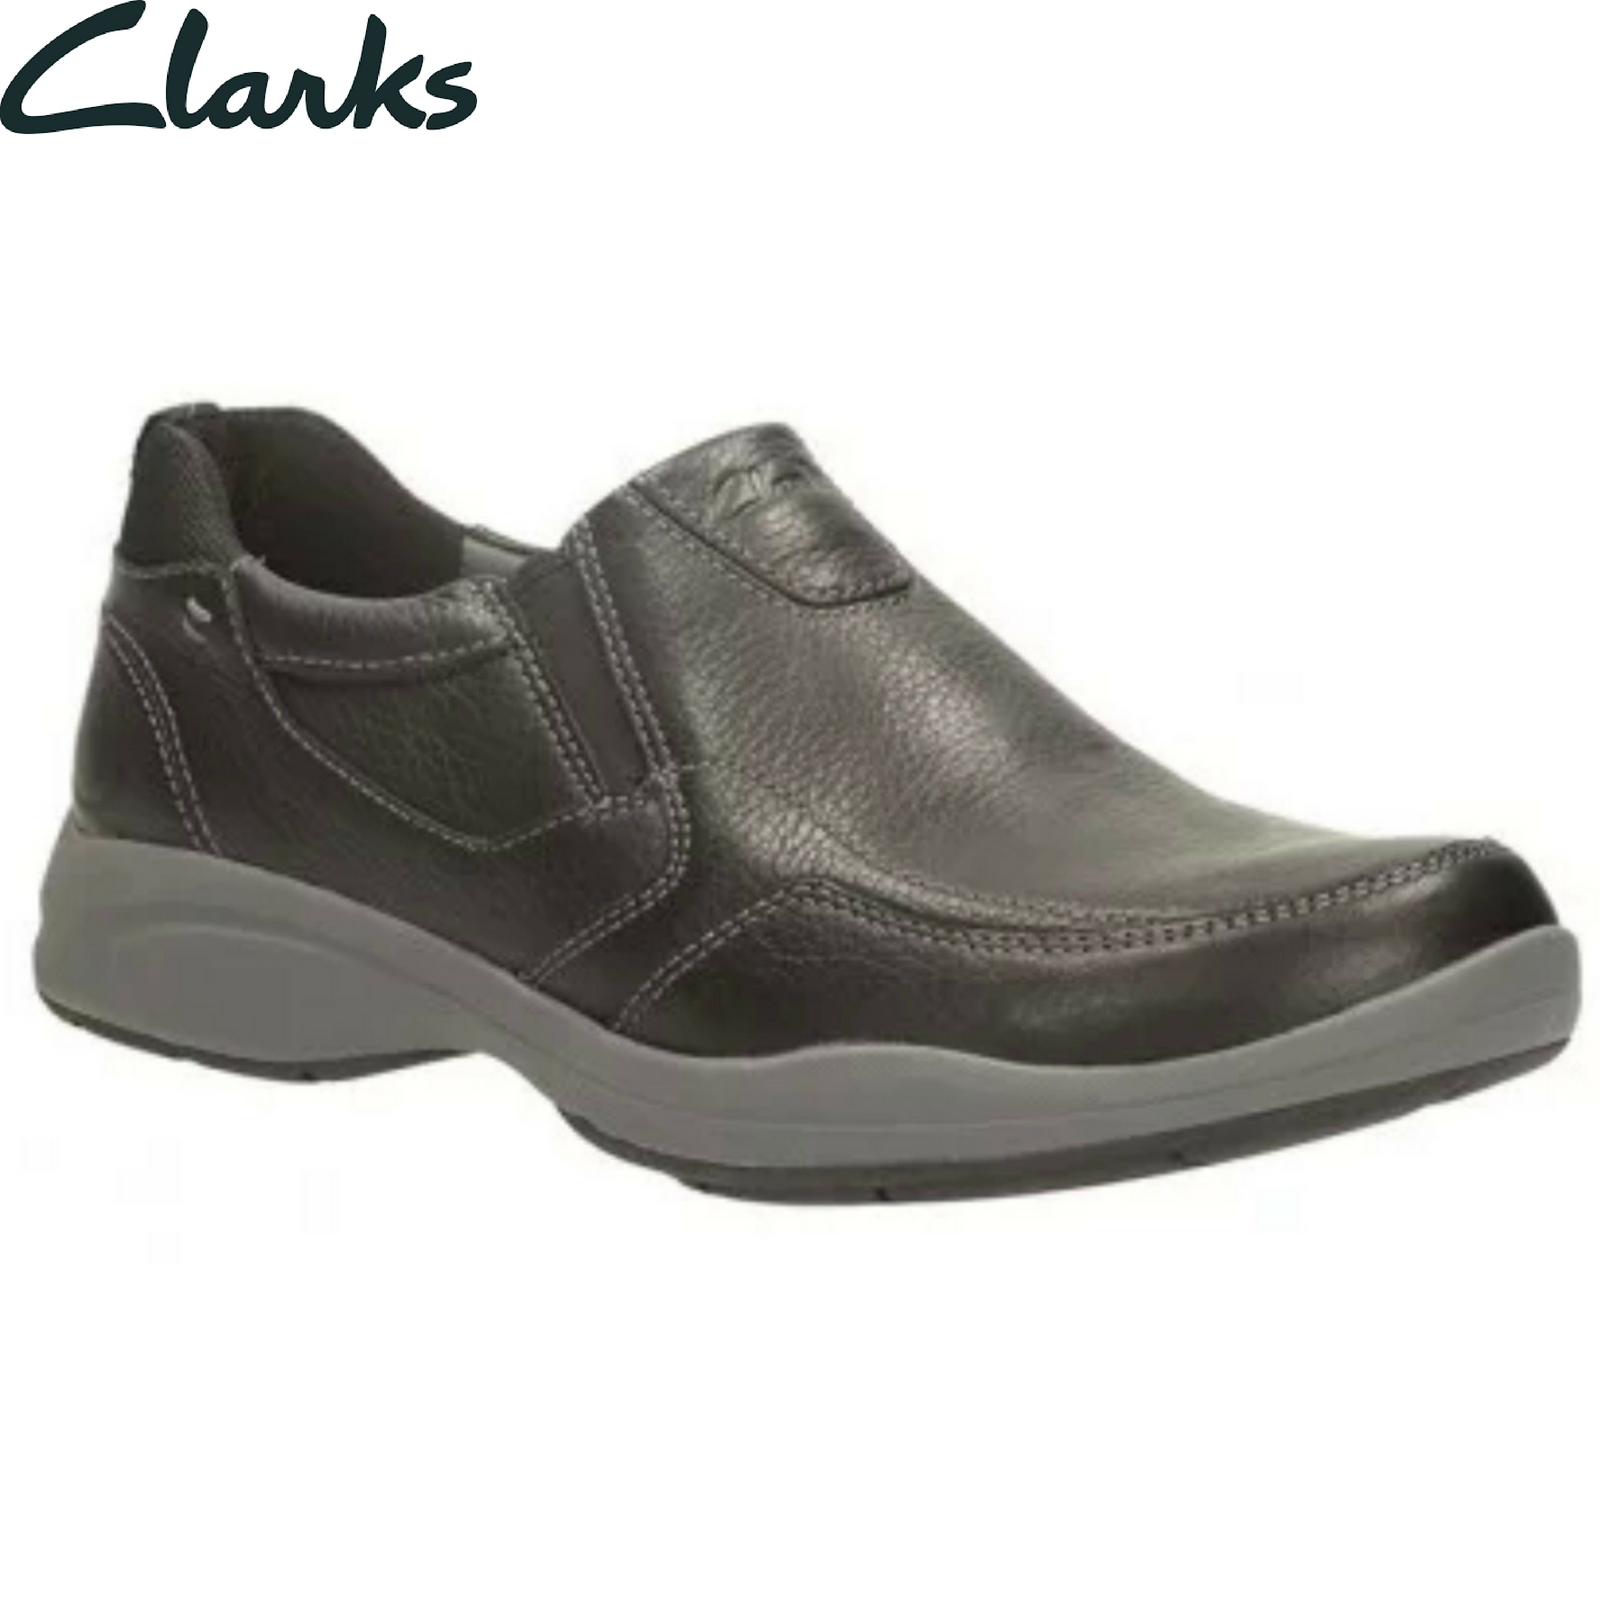 clarks mens shoes 13291